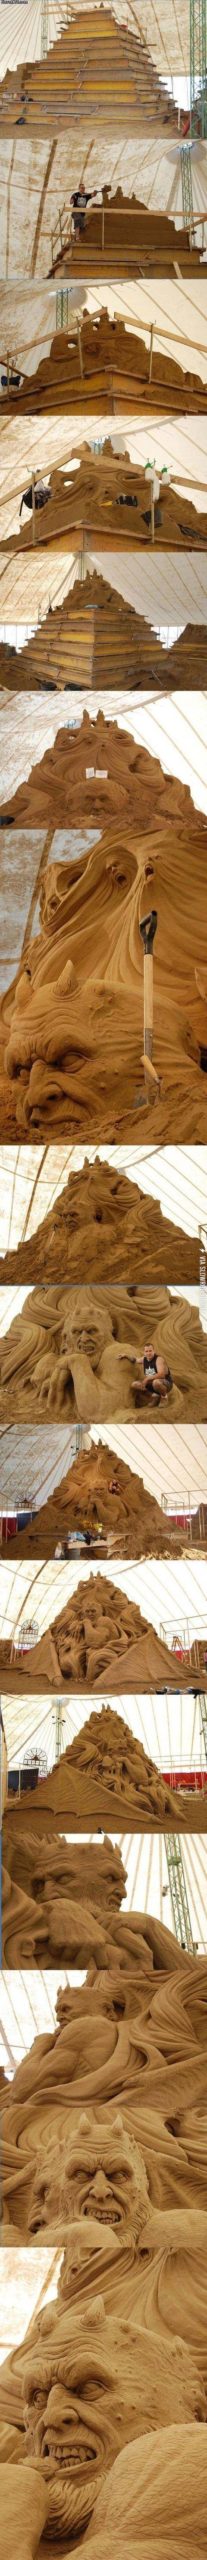 Amazing+sand+sculpture